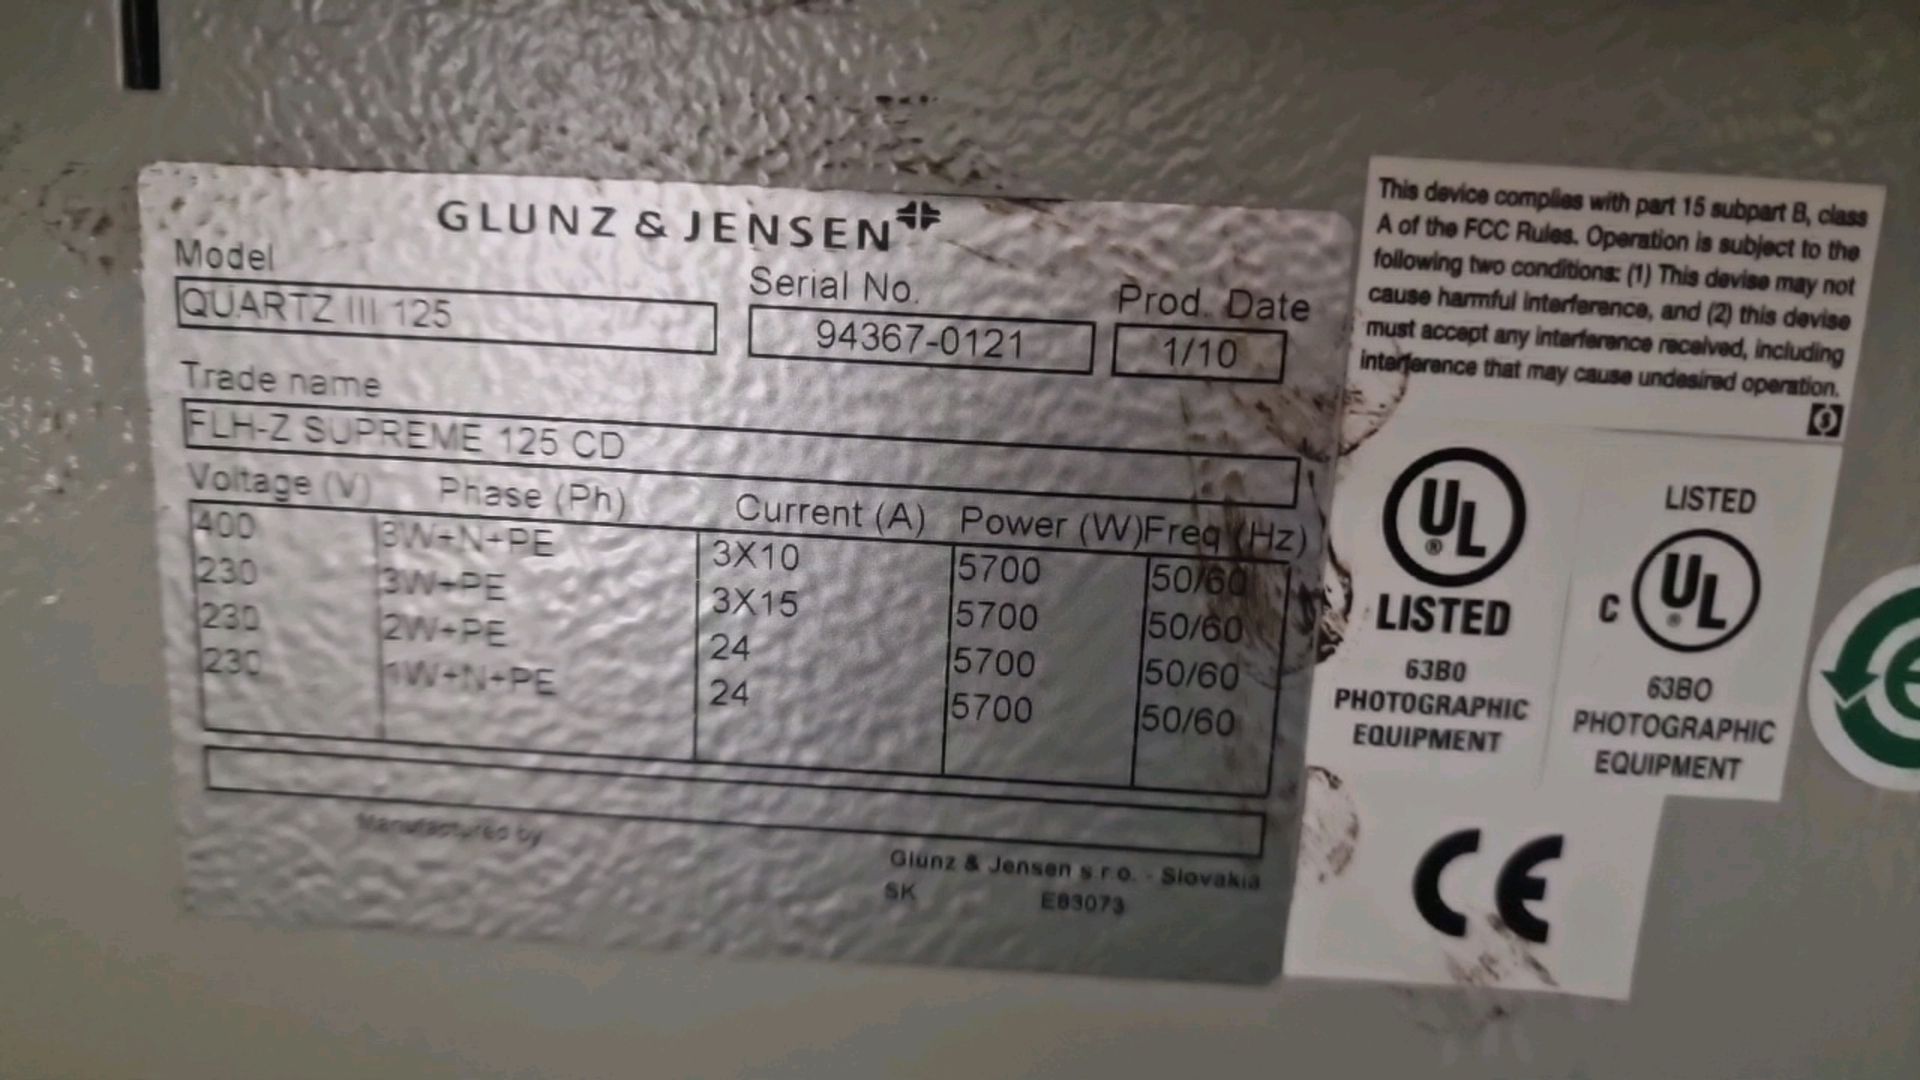 2010 Glunz & Jensen Quartz 111 125 Thermal Plate Processor - Bild 4 aus 9